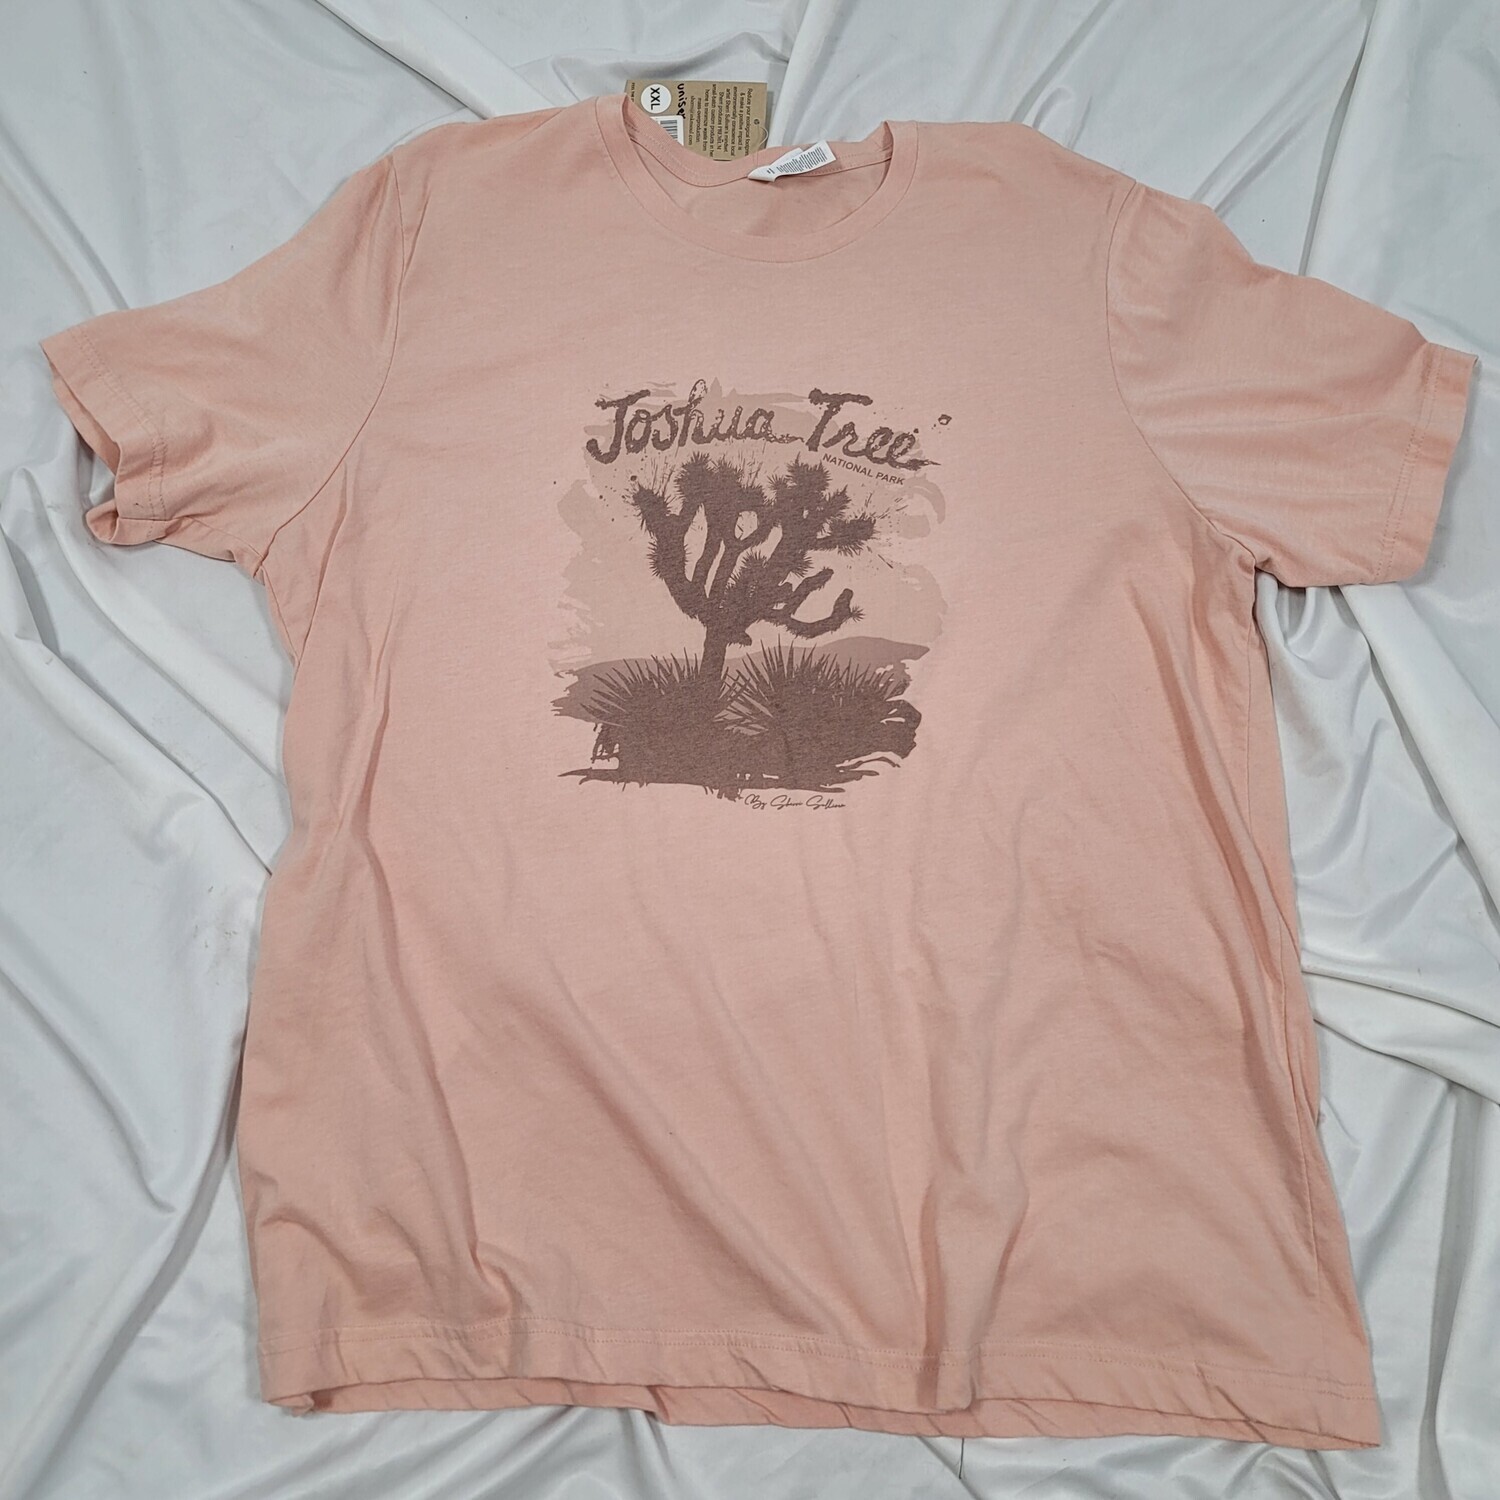 New Joshua Tree Peach Adult T-shirt